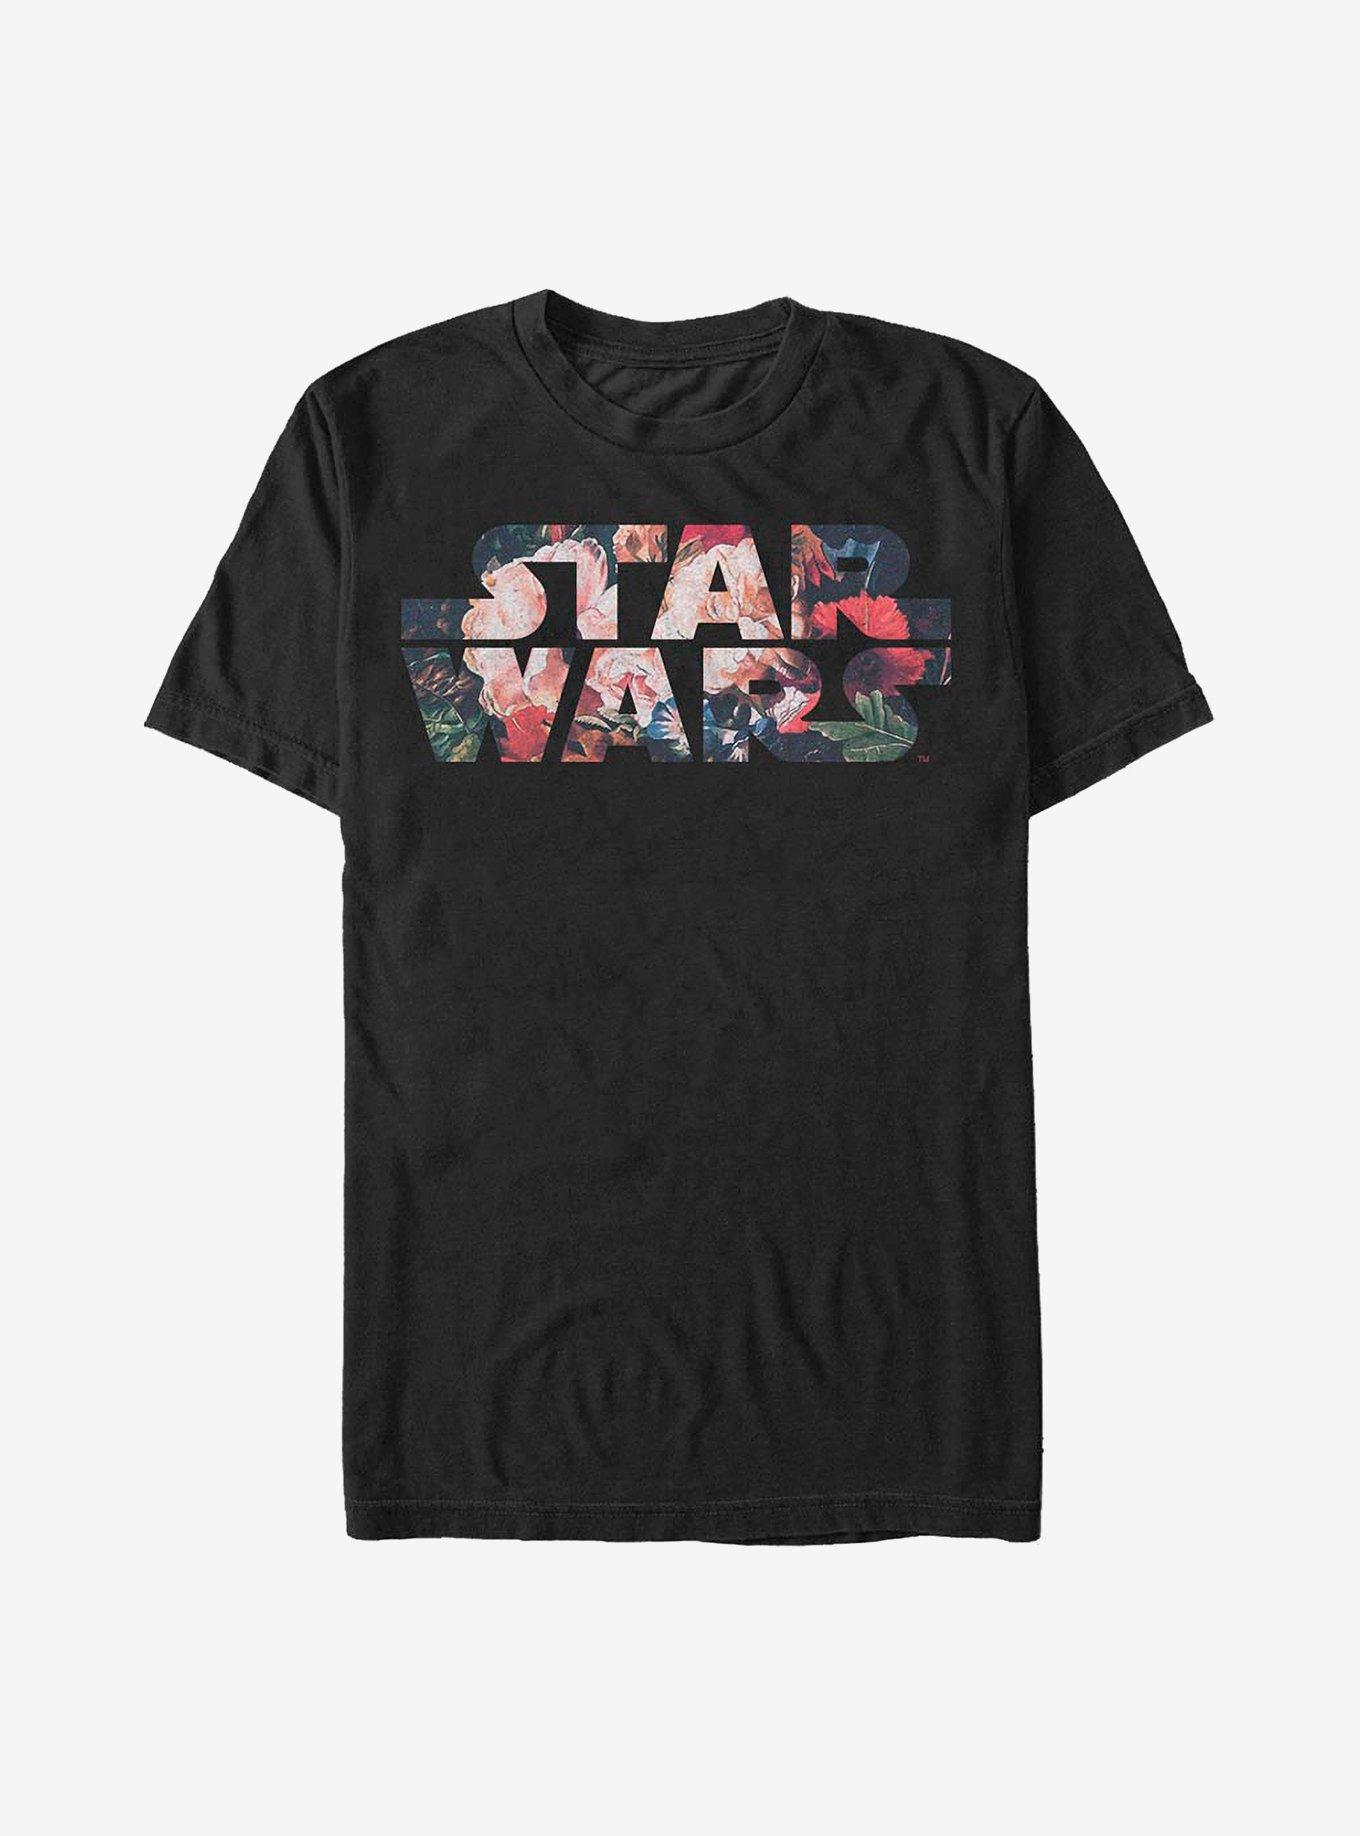 Star Wars Antique Flowers T-Shirt, BLACK, hi-res